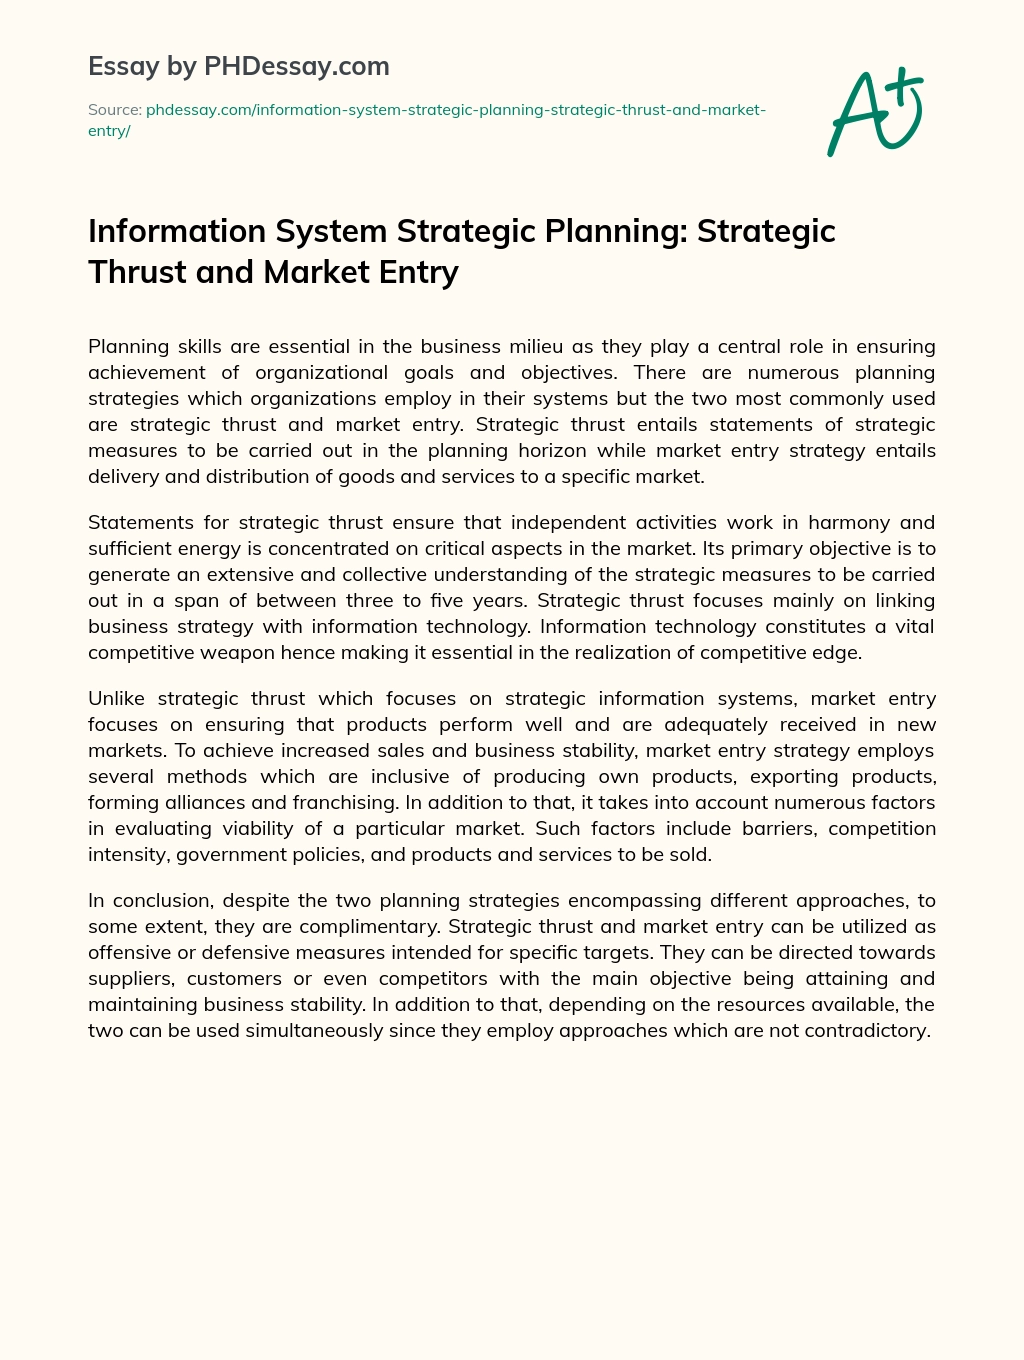 Information System Strategic Planning: Strategic Thrust and Market Entry essay